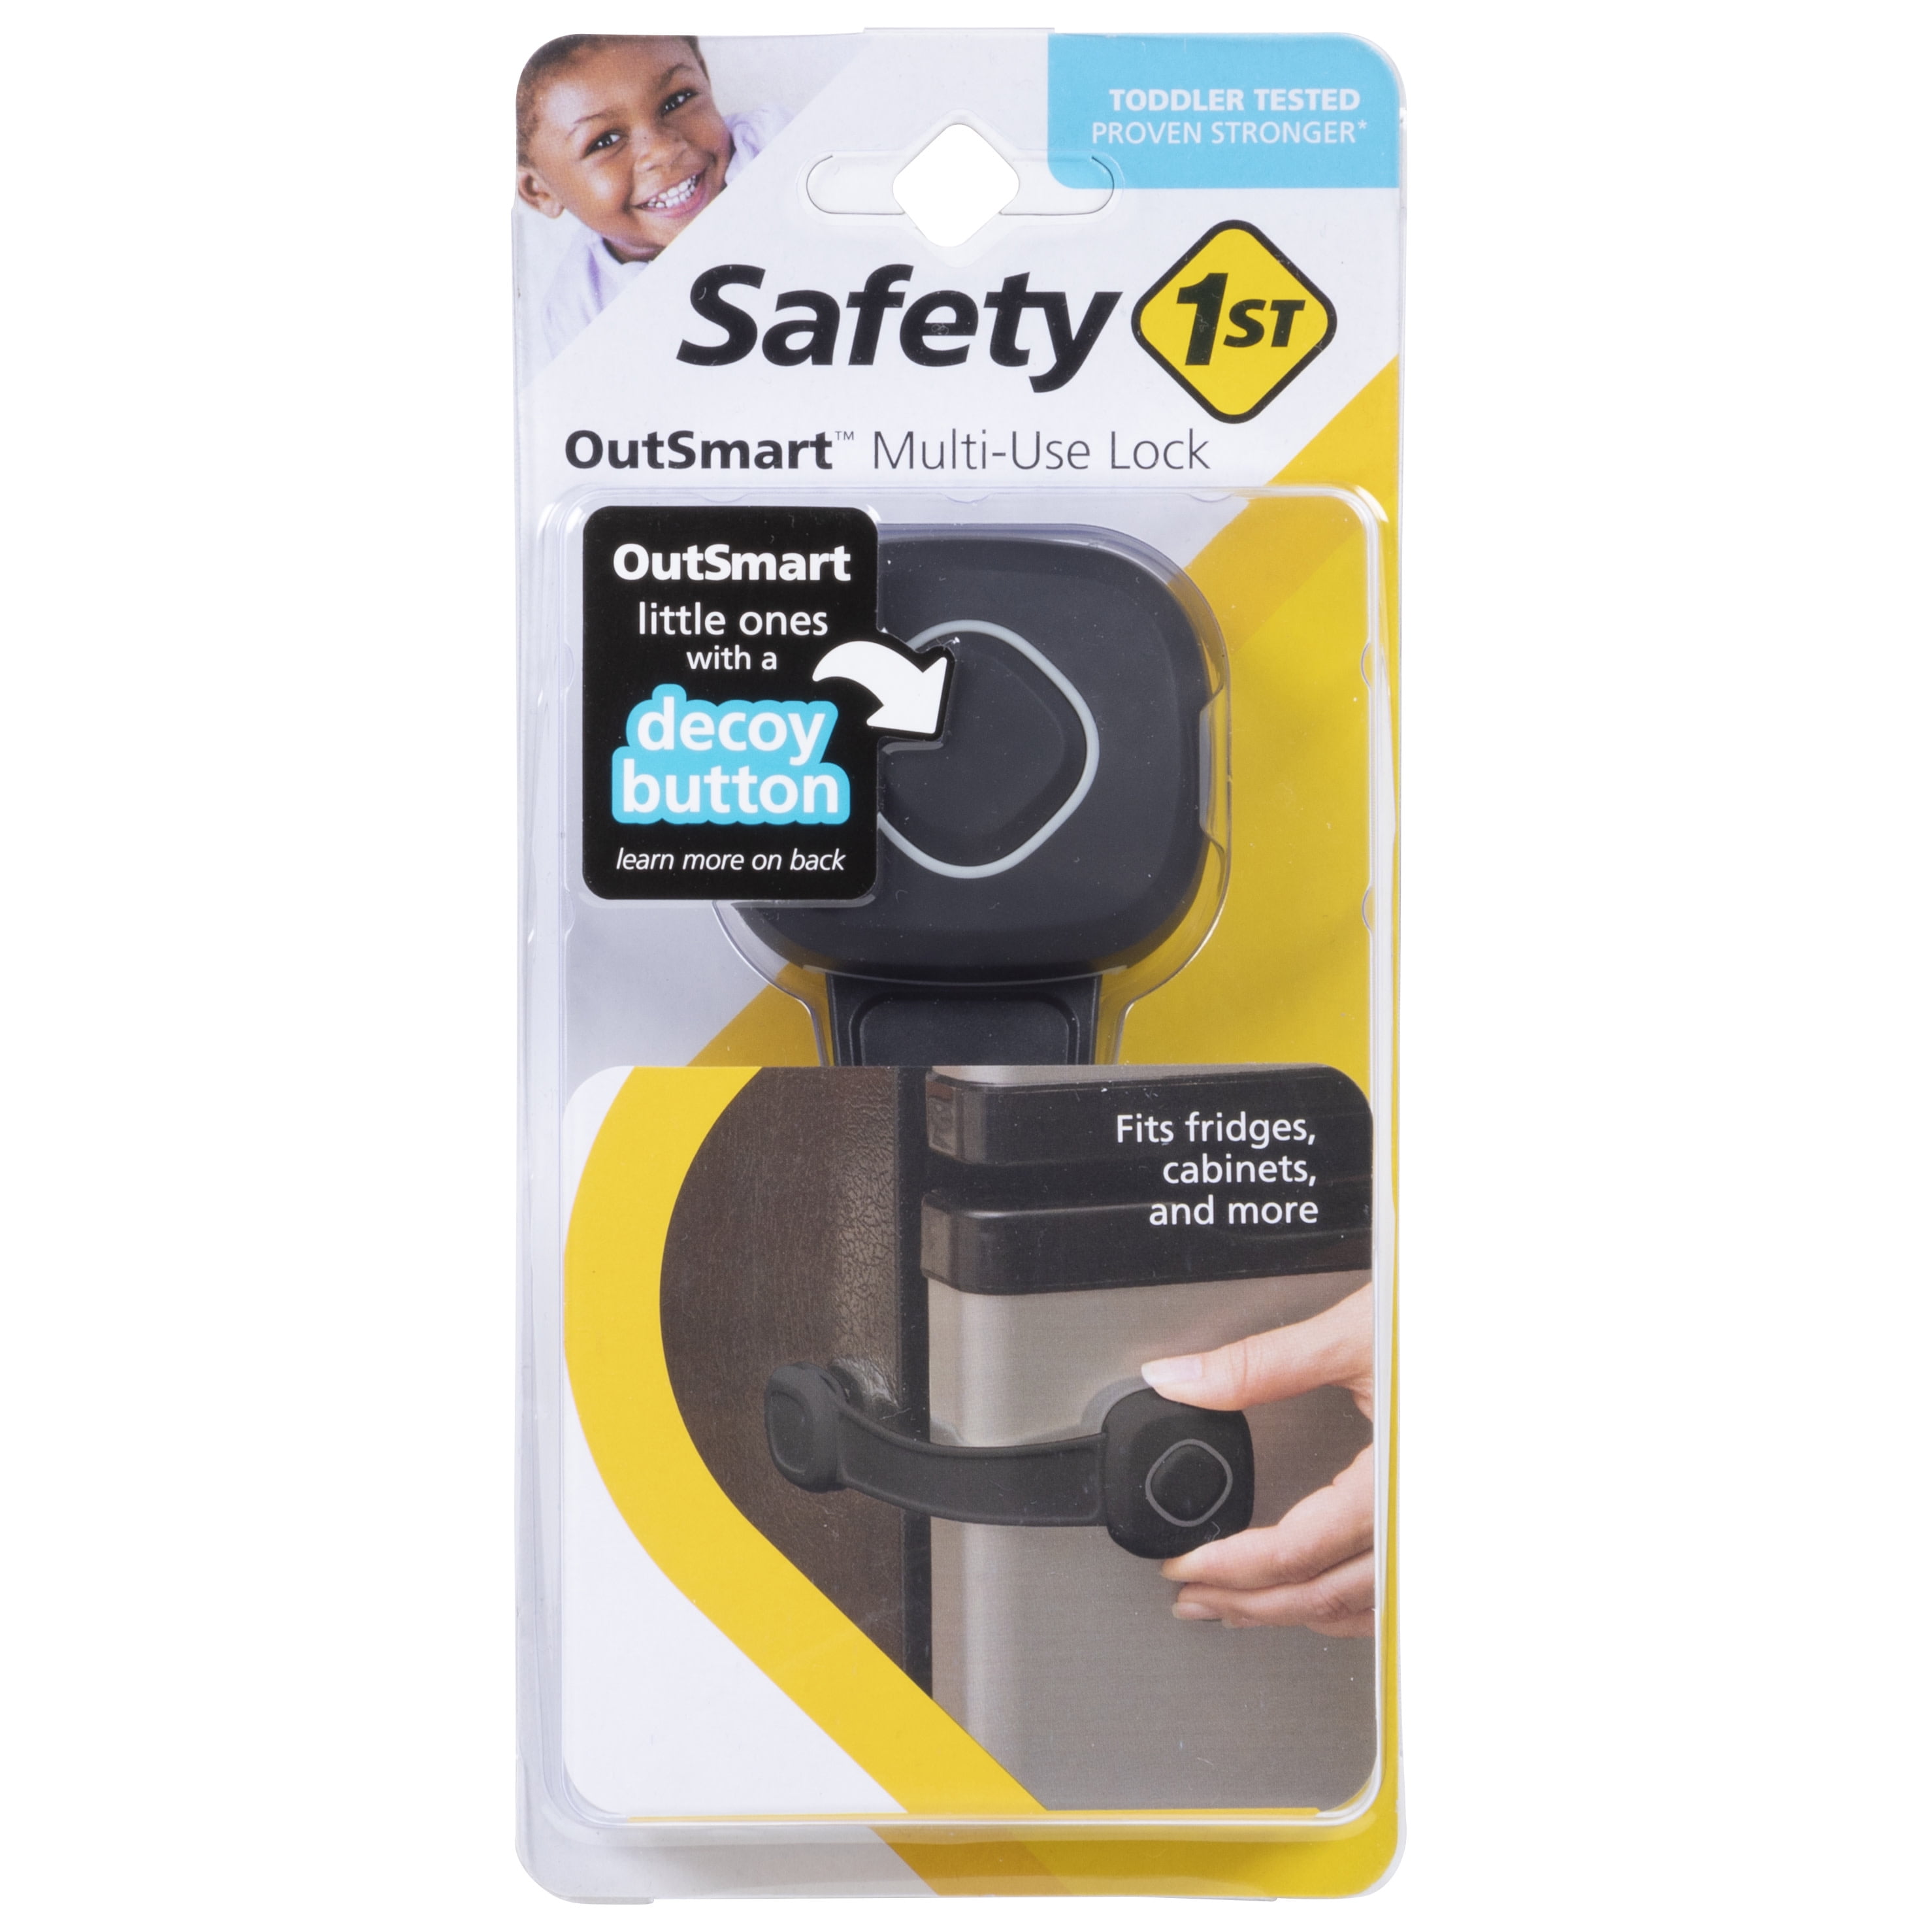 Safety 1ˢᵗ OutSmart Multi-Use Lock (Black), Black